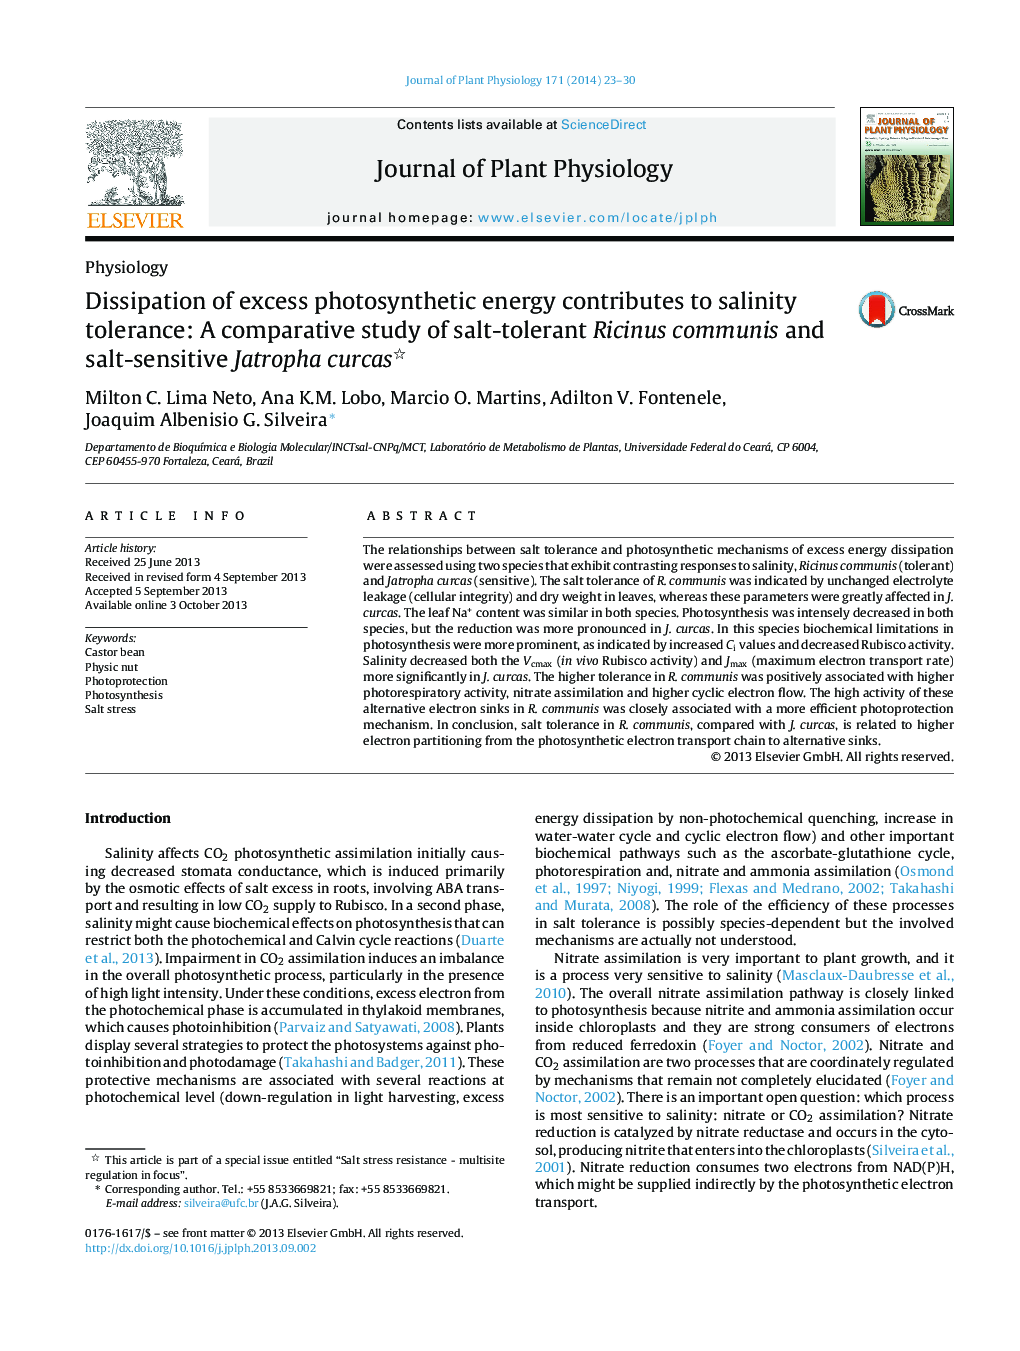 Dissipation of excess photosynthetic energy contributes to salinity tolerance: A comparative study of salt-tolerant Ricinus communis and salt-sensitive Jatropha curcas 